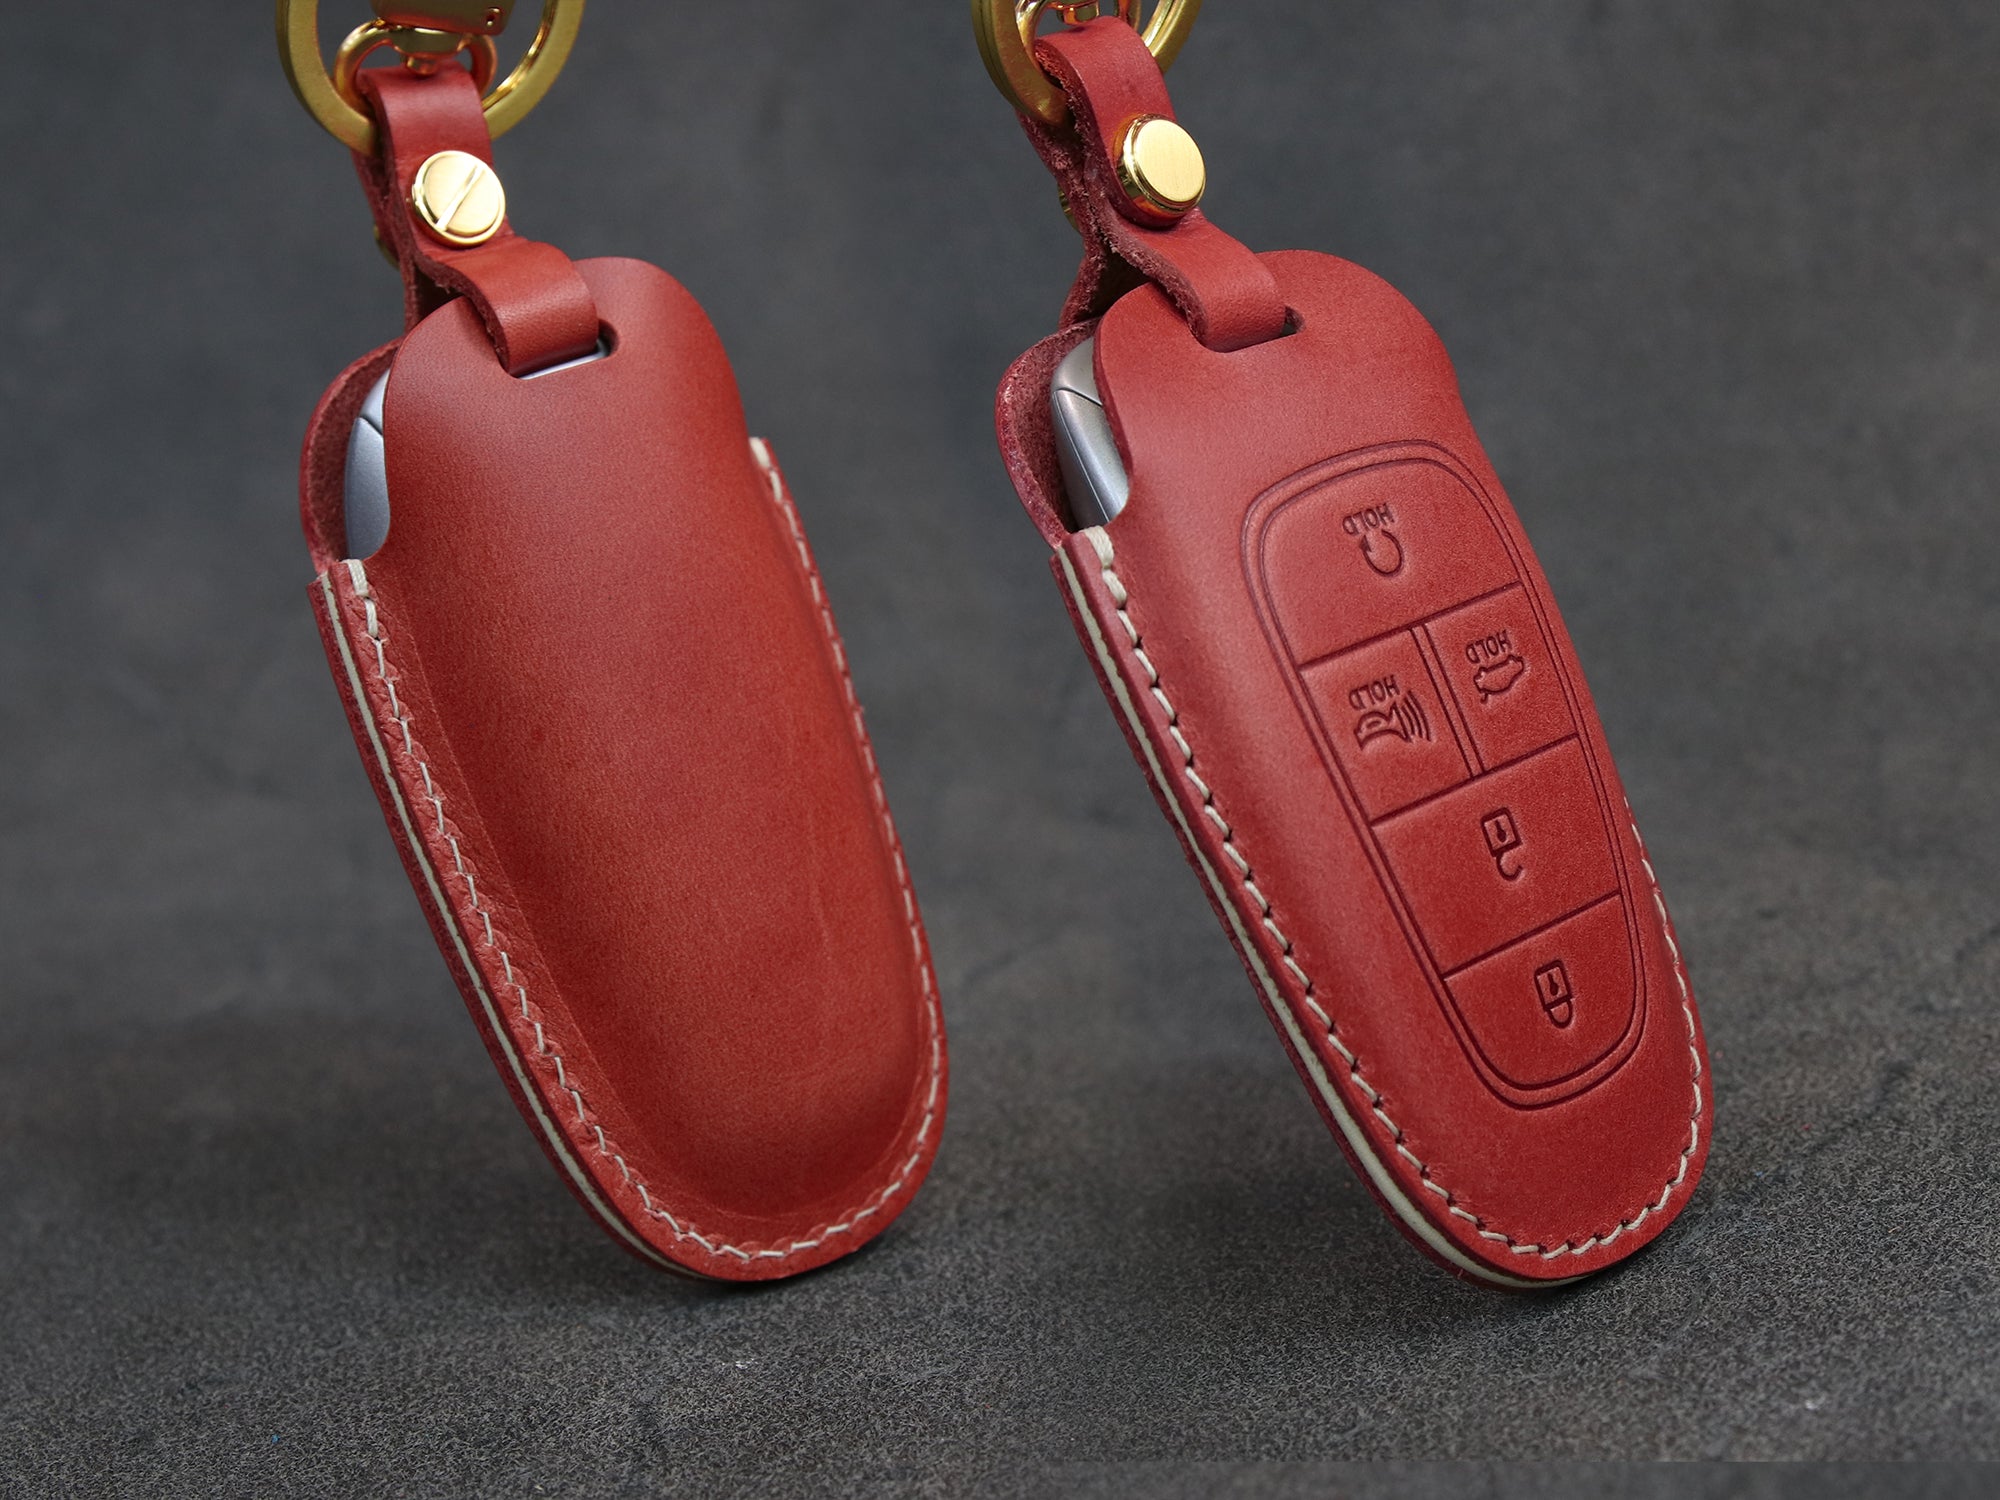 Genesis Series [2] Key Fob Cover Premium Leather Keyless Remote